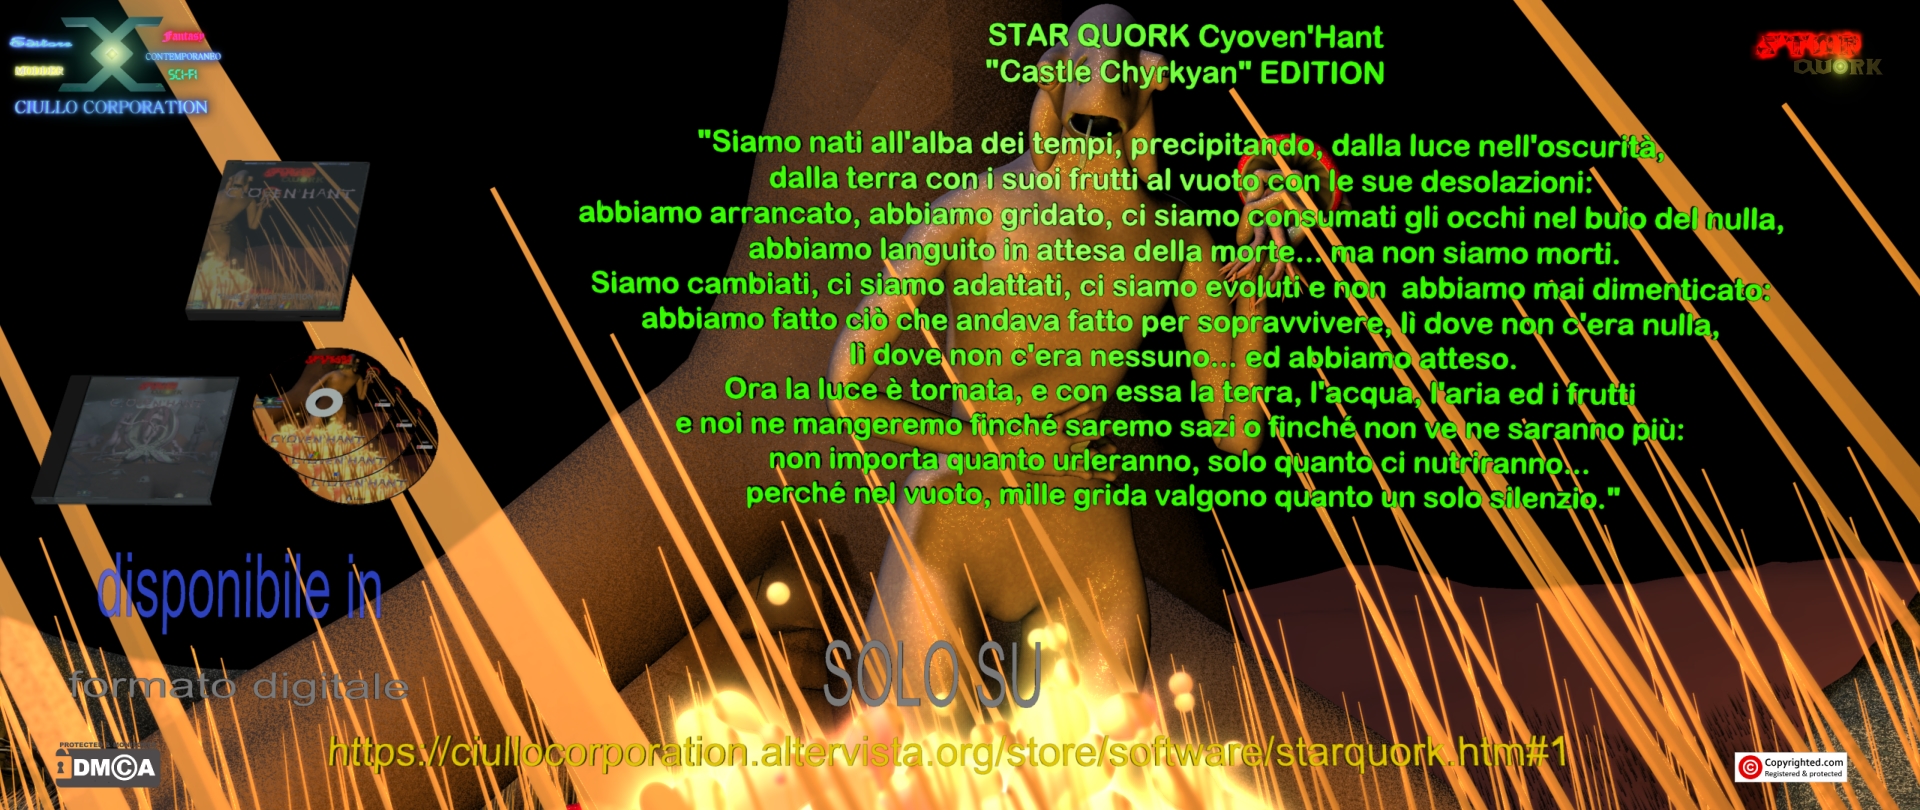 STAR QUORK Cyoven'Hant (FULL Access)